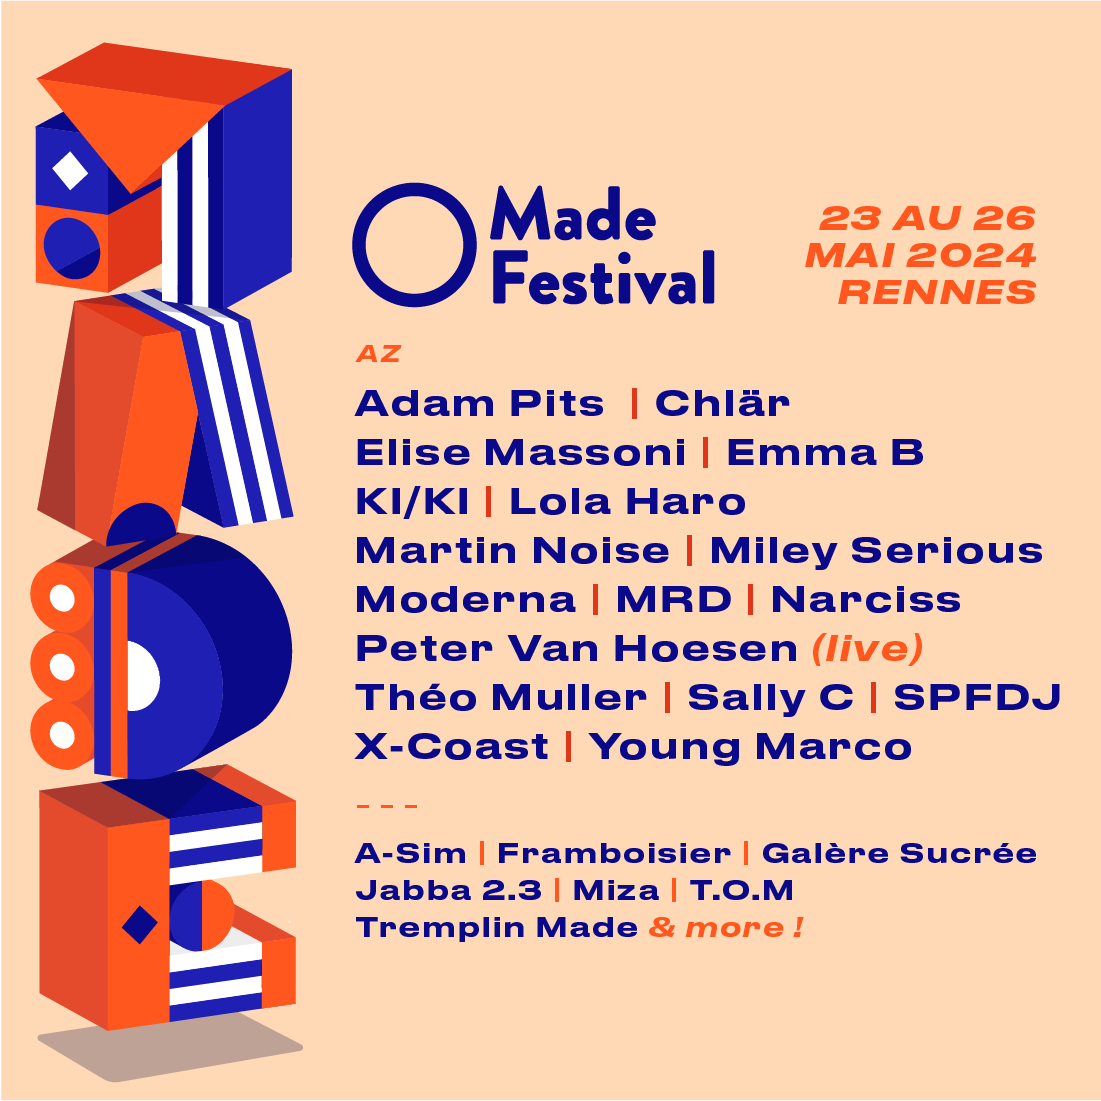 Made Festival 2024 Rennes - フライヤー裏